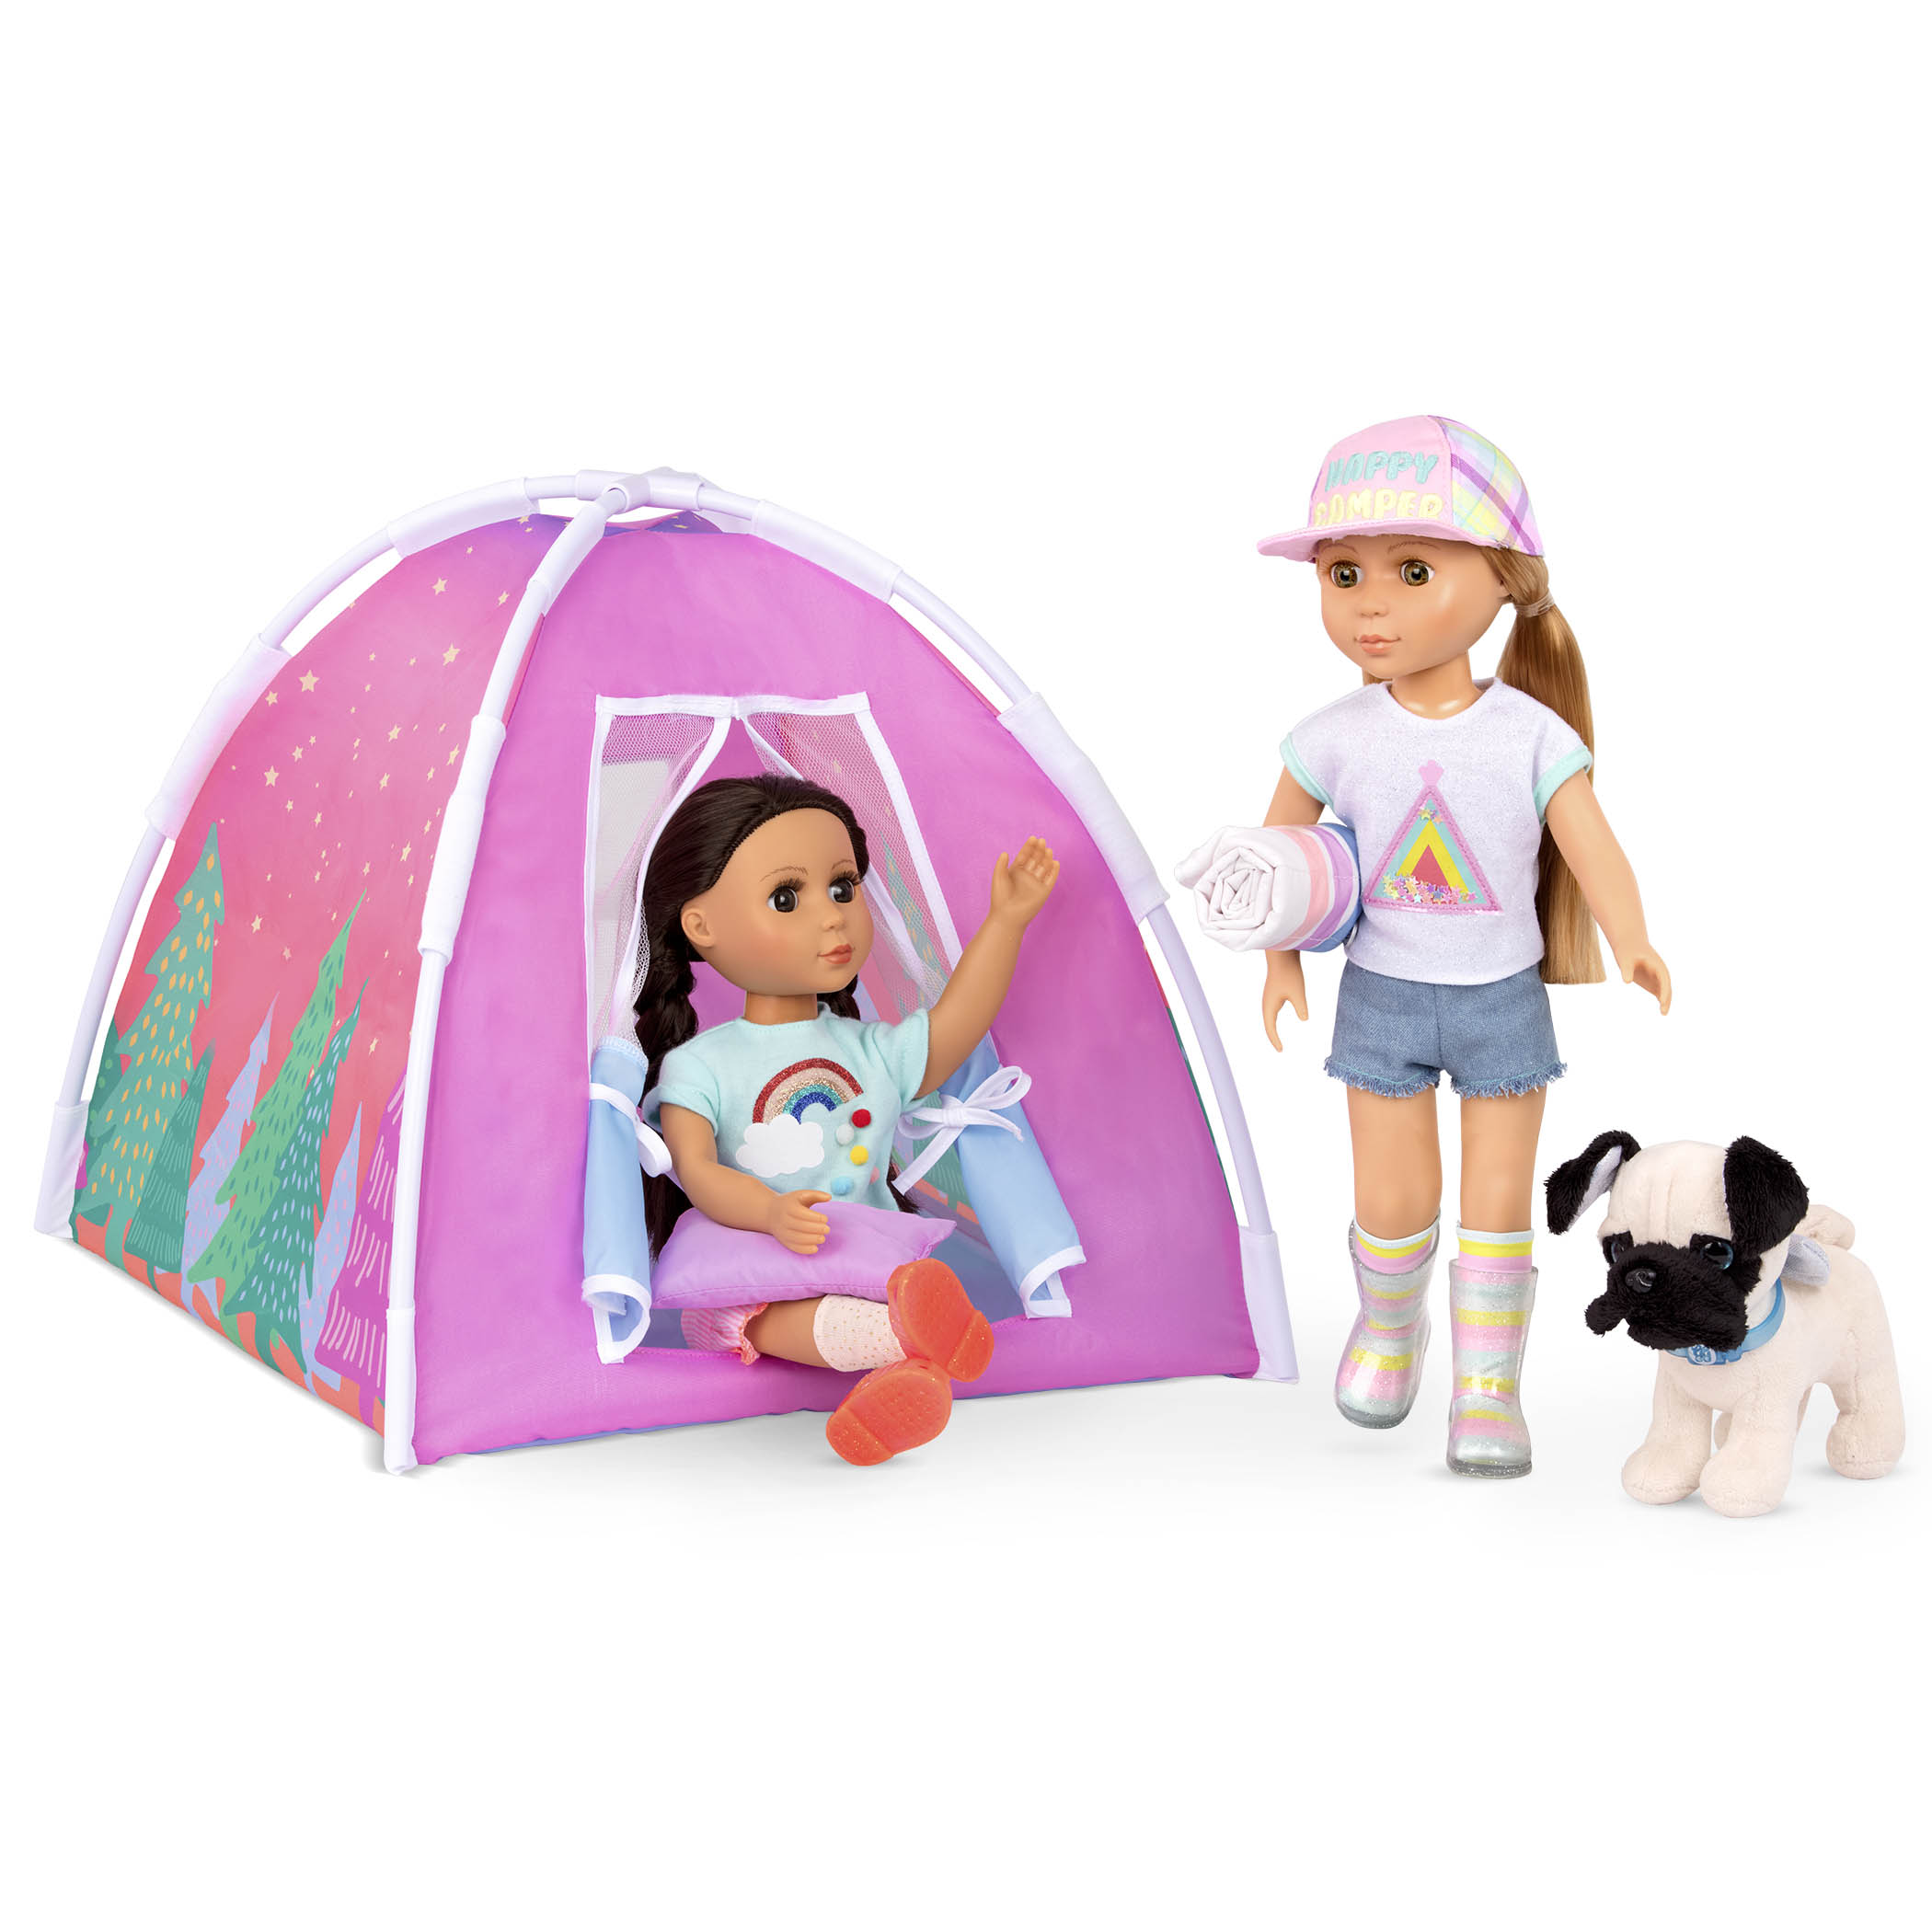 https://myglittergirls.com/wp-content/uploads/GG57155_Glitter-Girls-Camping-Tent-Set-with-14-inch-dolls-Astrid-Bria.jpg